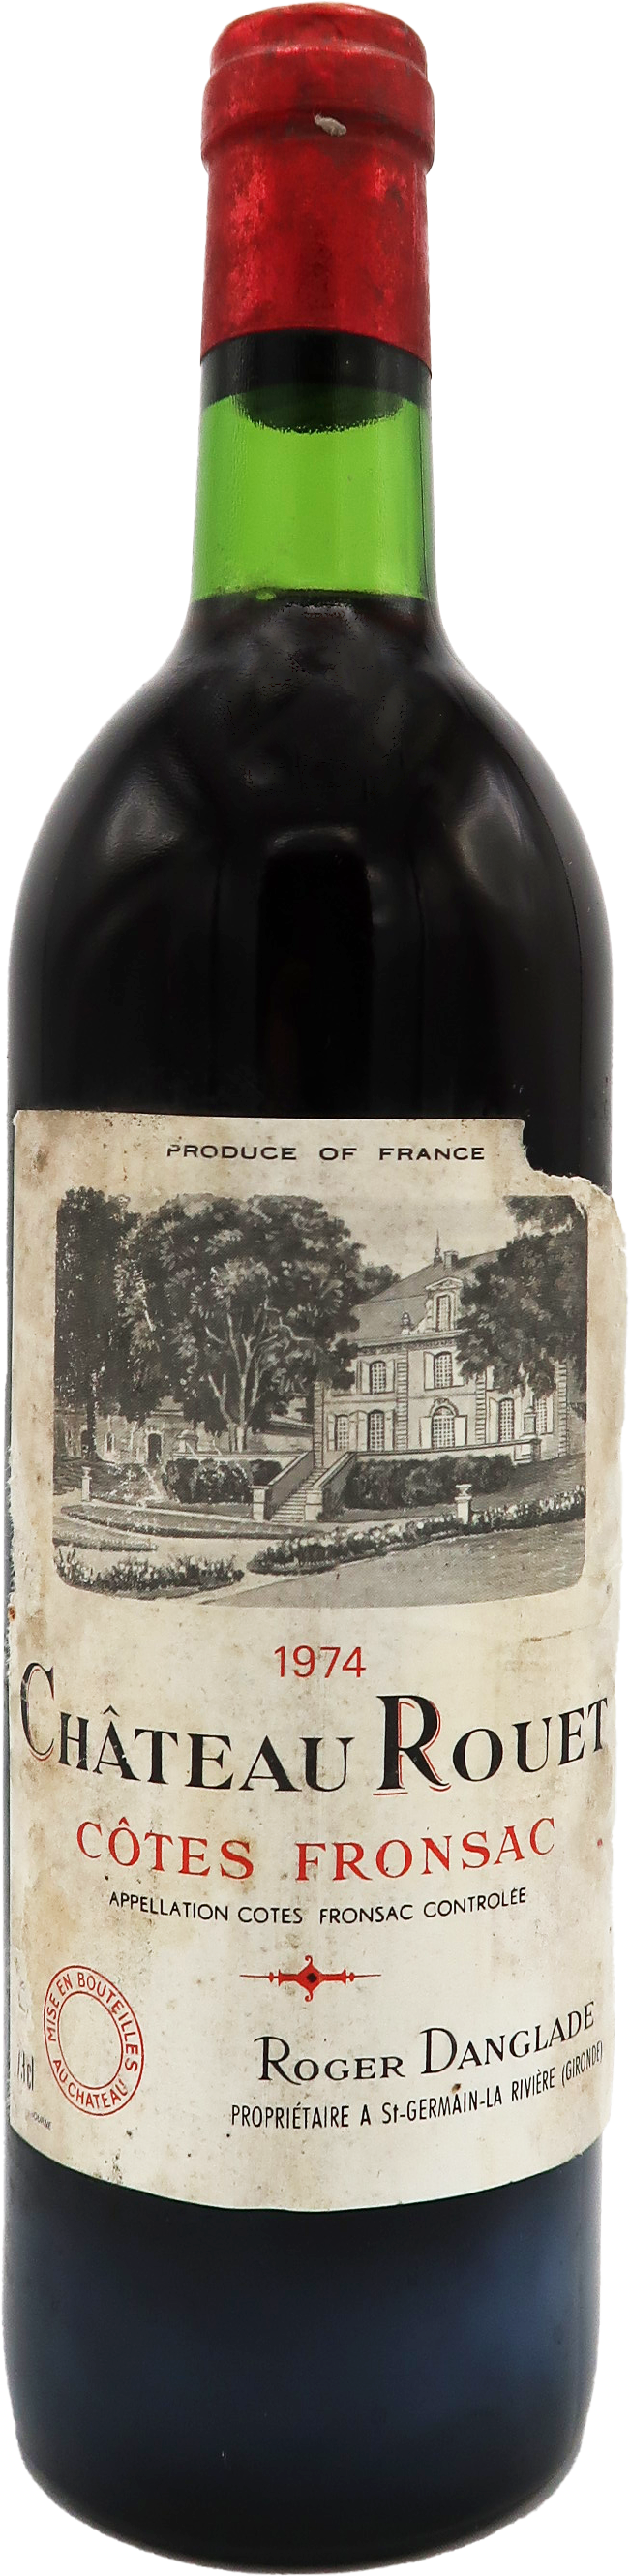 Château Rouet 1974 - Fronsac